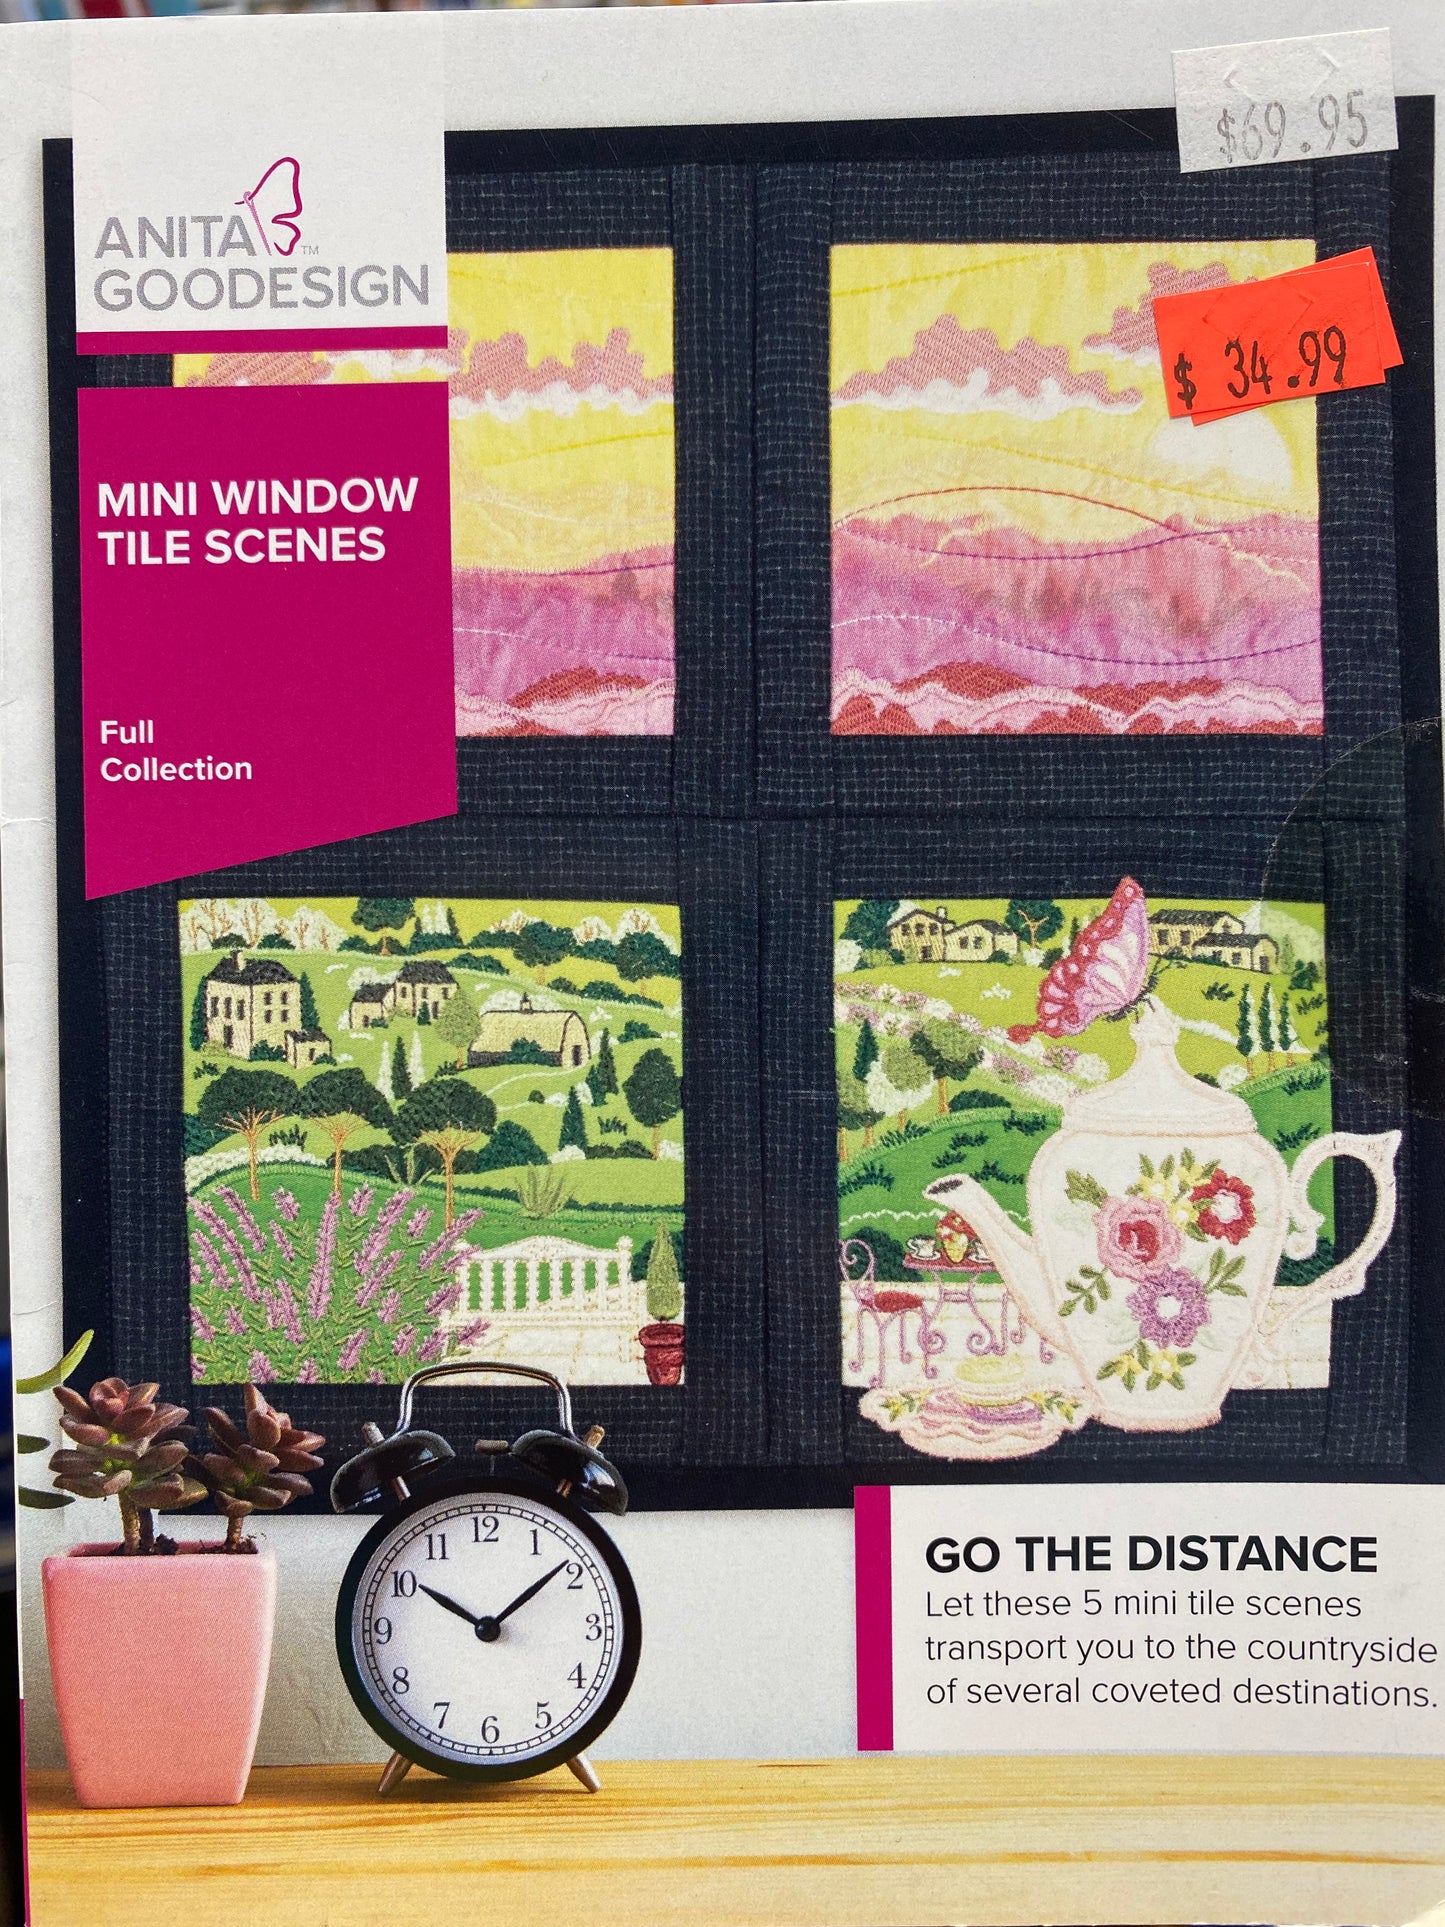 Mini Window Tile Scenes by Anita Goodesign